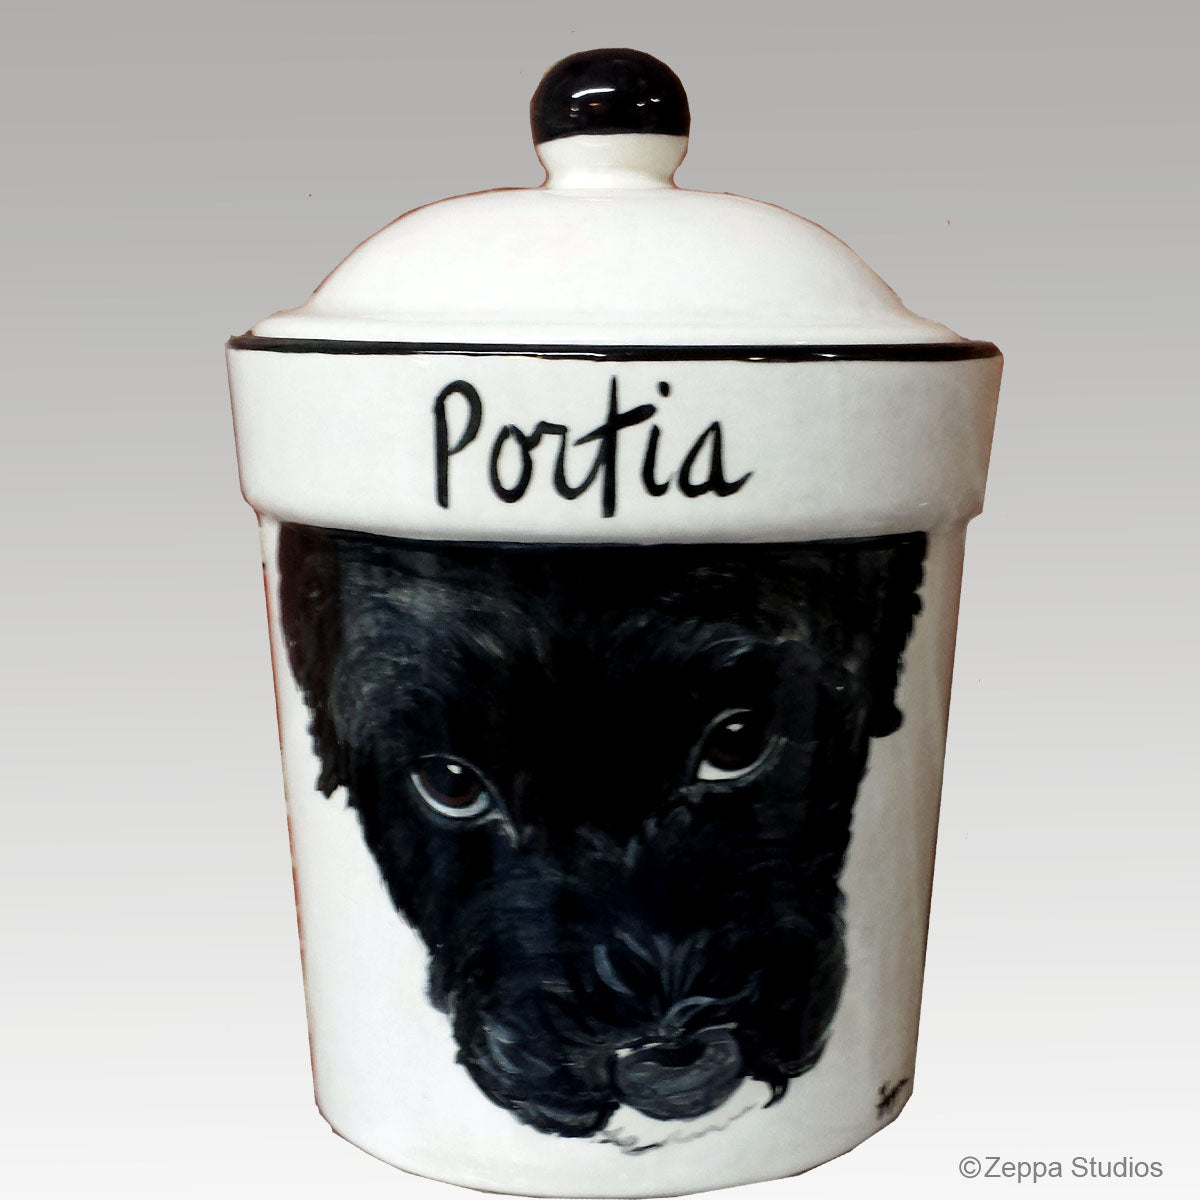 Custom Hand Painted Ceramic Treat Jar, "Portia" by Zeppa Studios